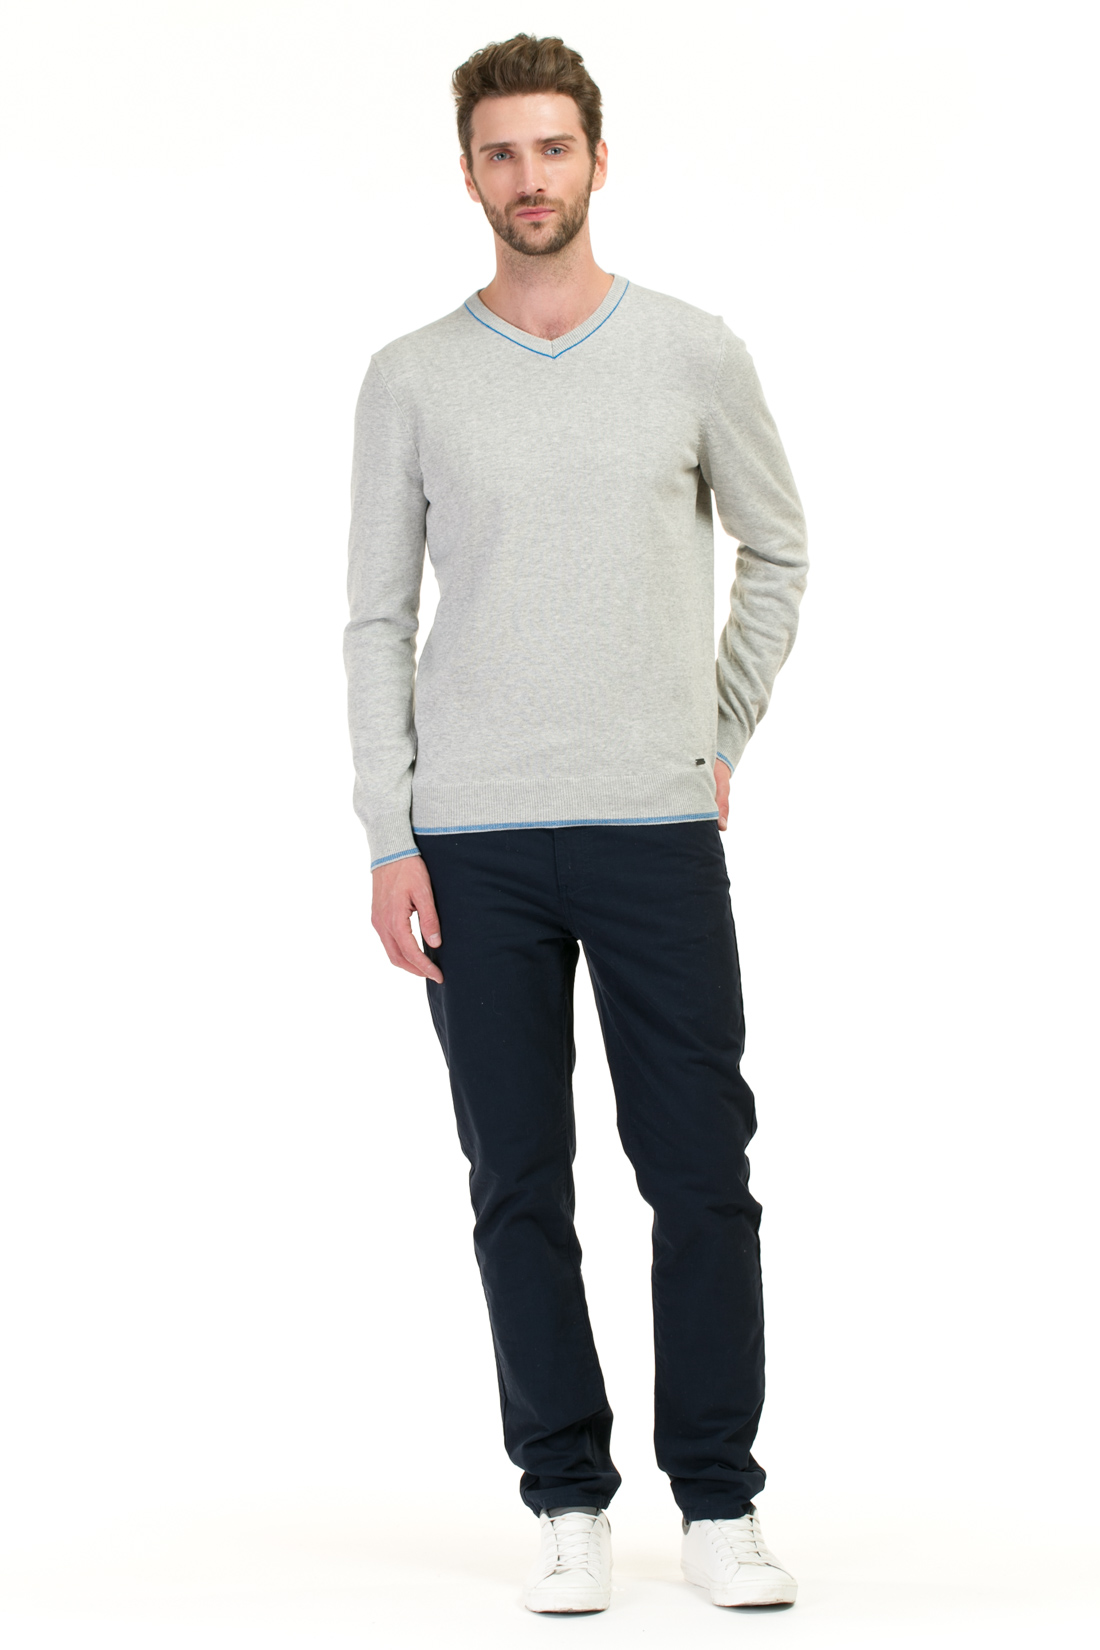 Пуловер с окантовкой (арт. baon B637011), размер L, цвет silver melange#серый Пуловер с окантовкой (арт. baon B637011) - фото 5